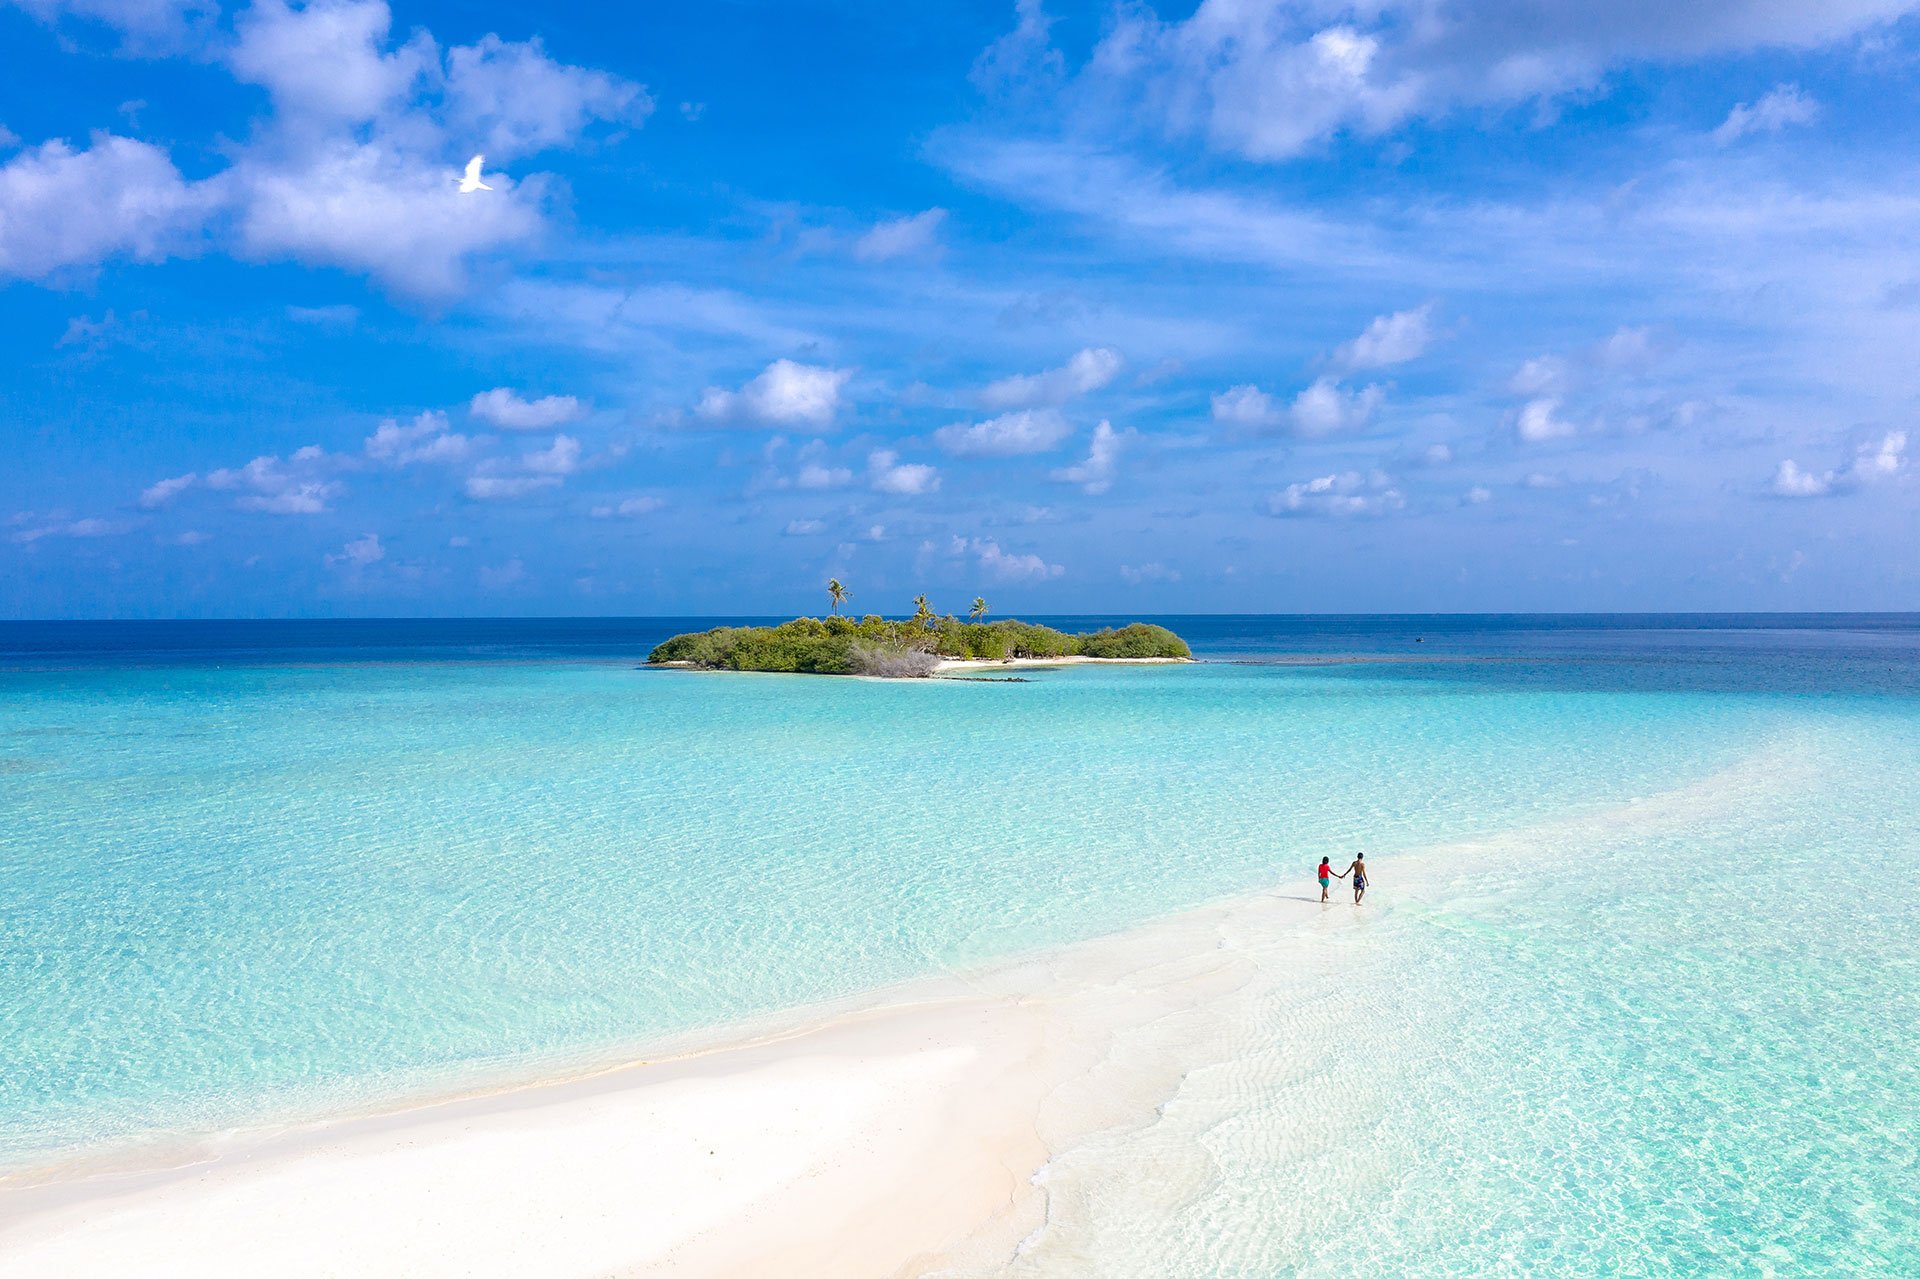 The-Maldives-is-a-popular-romantic-getaway-location